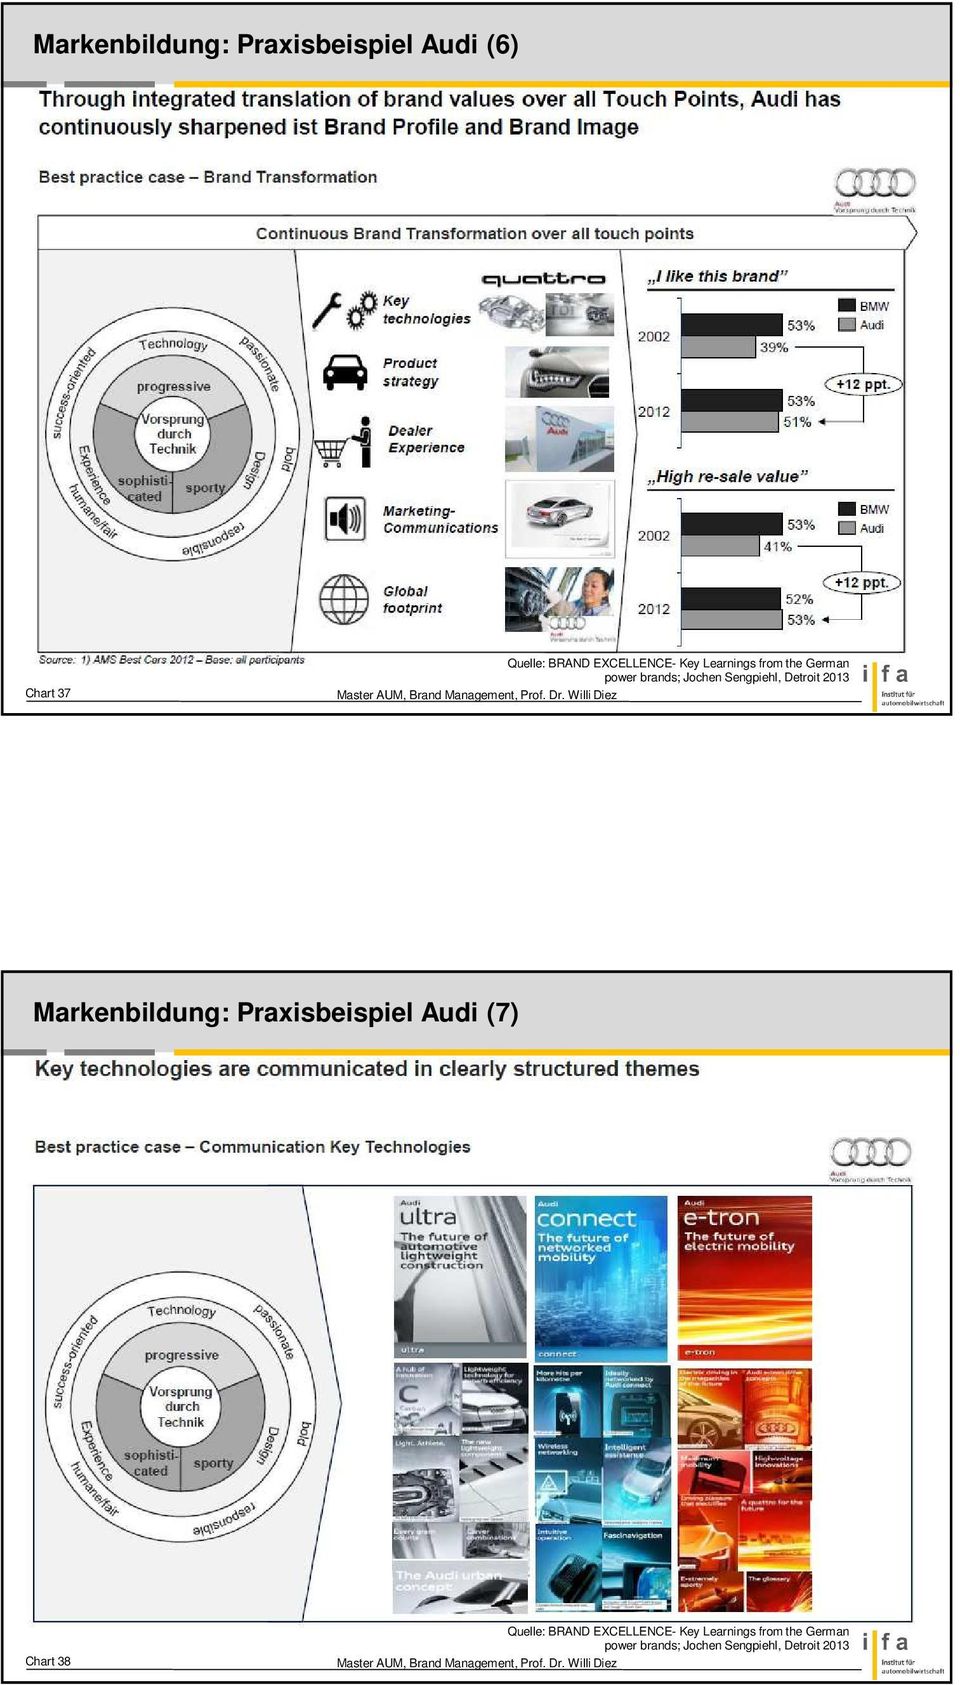 Markenbildung: Praxisbeispiel Audi (7) Chart 38 Quelle: BRAND EXCELLENCE-